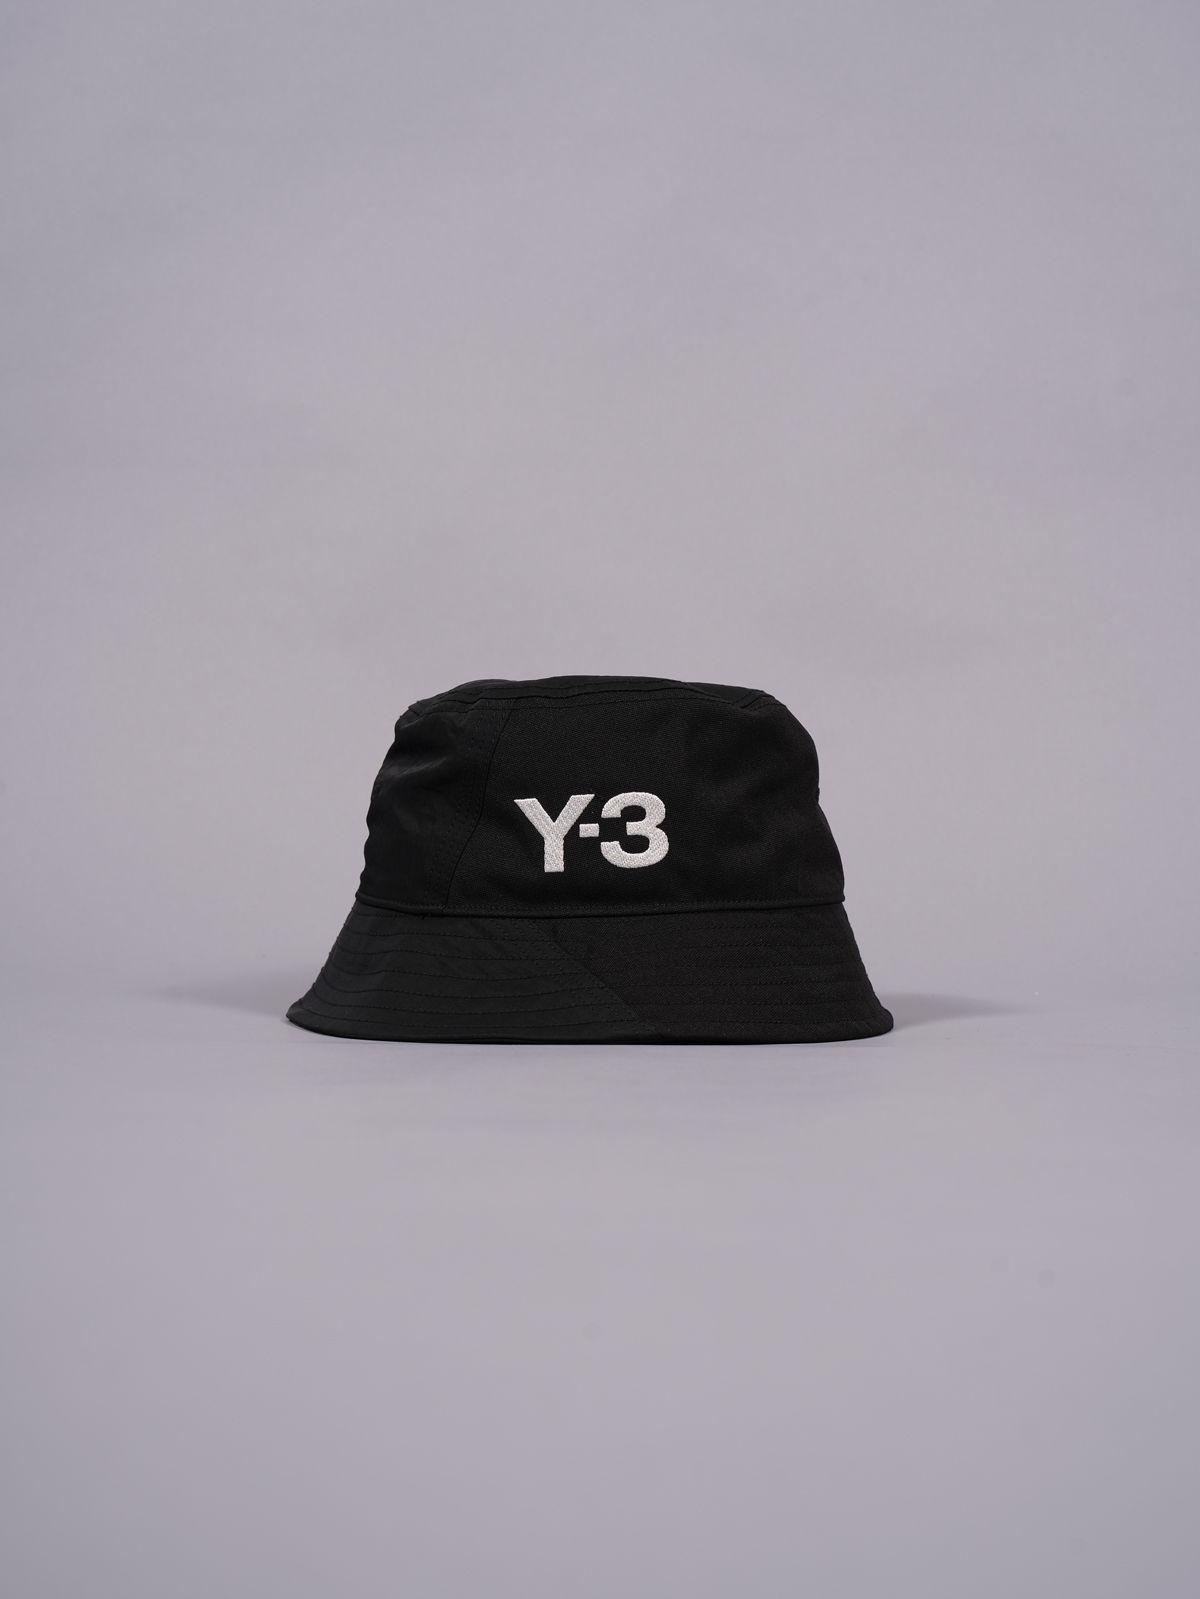 Y-3 - 【ラスト1点】Y-3 BUCKET HAT / ワイスリー バケットハット